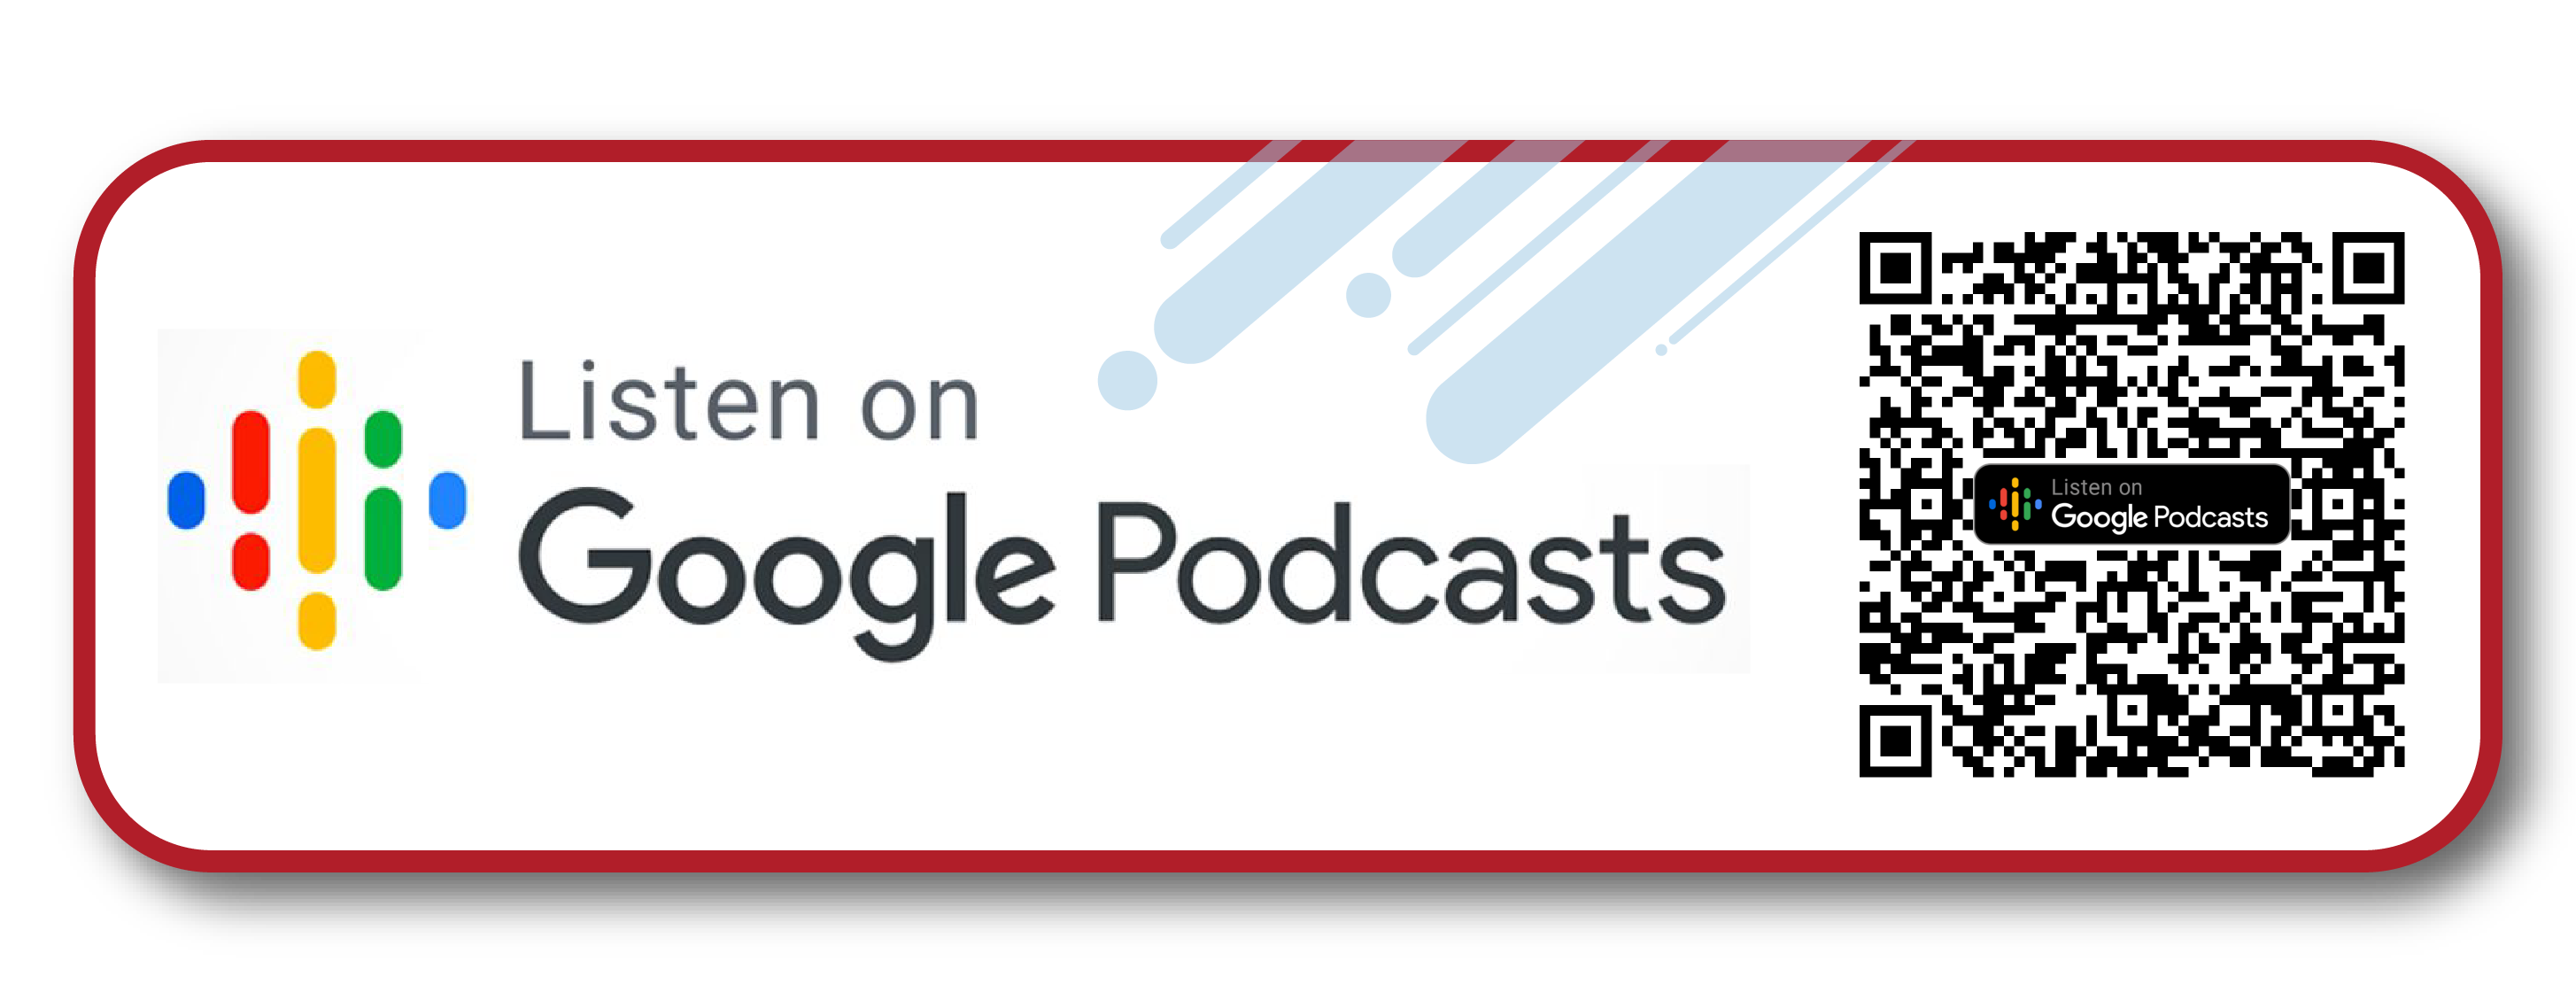 Google_Podcasts_BT_1